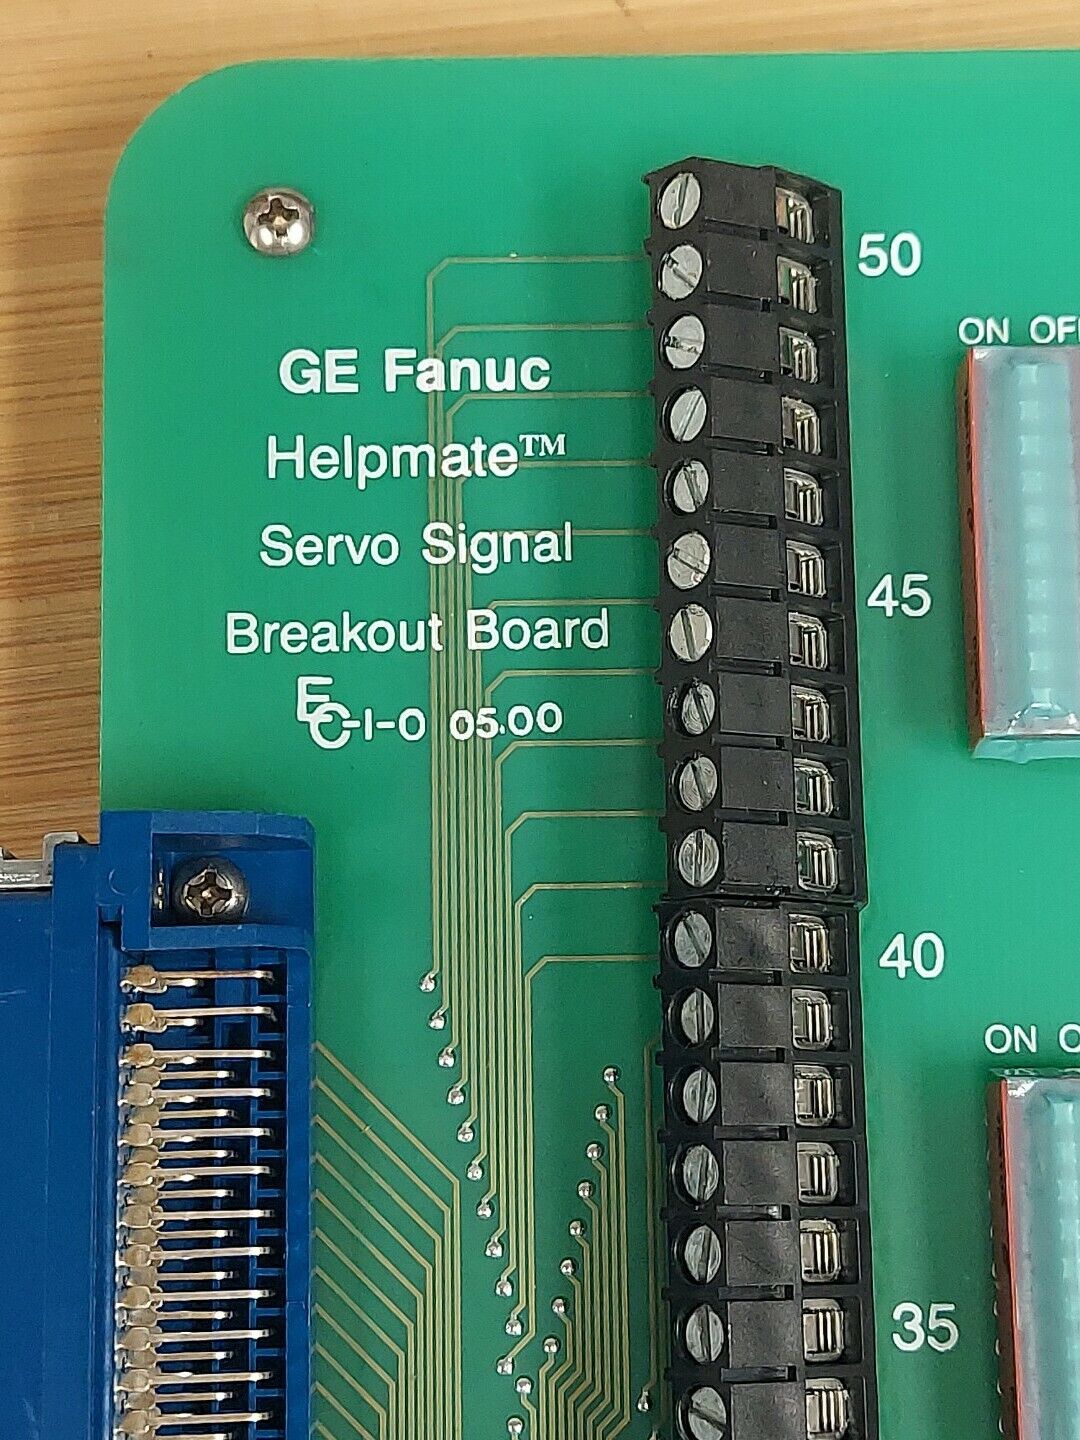 Fanuc 44A728128-G01 Helpmate Servo Signal Breakout Box (CB103)